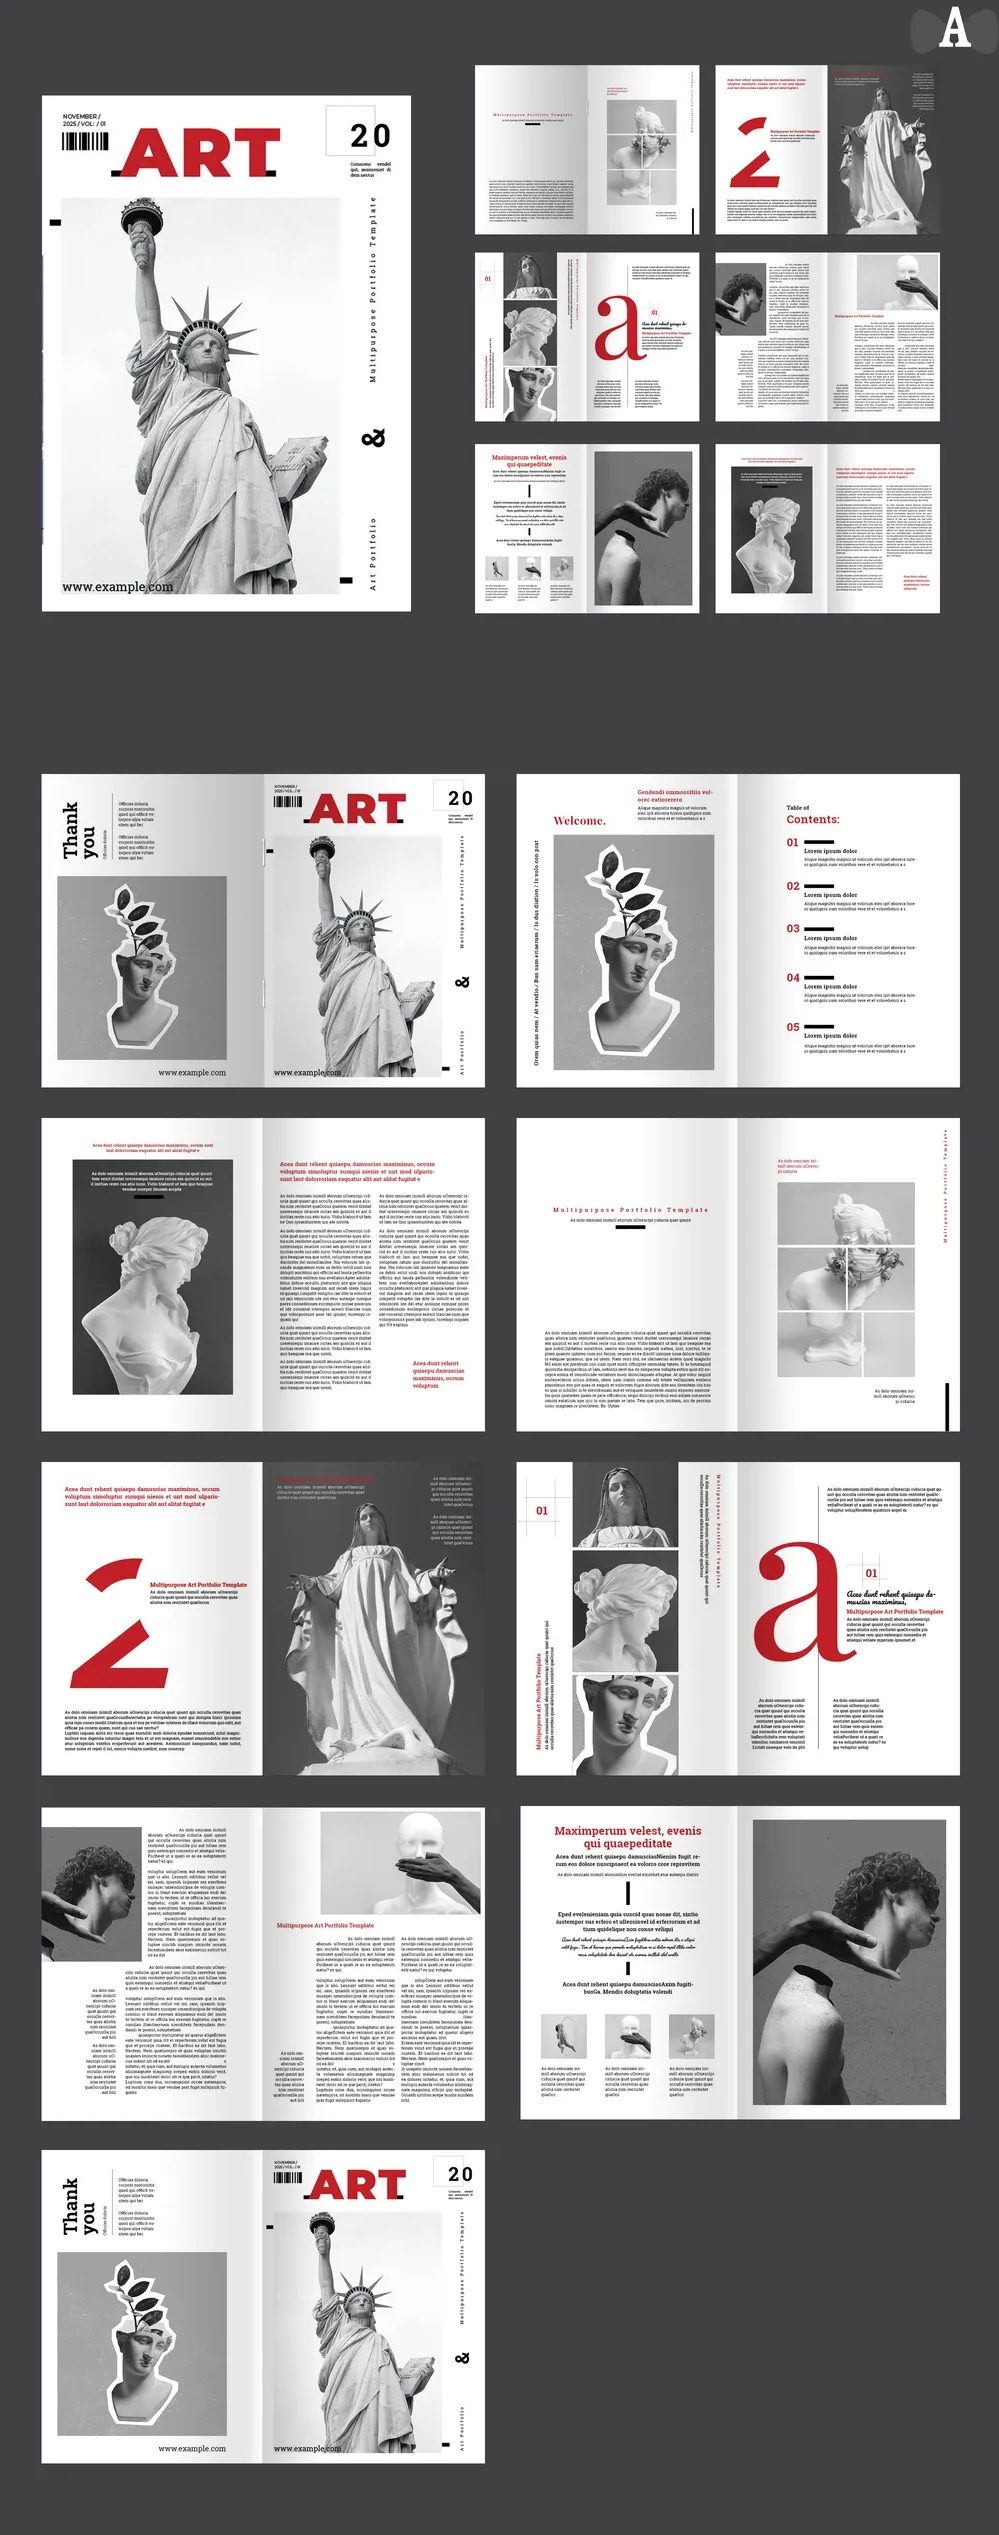 Adobestock - Art Magazine Template 716636966